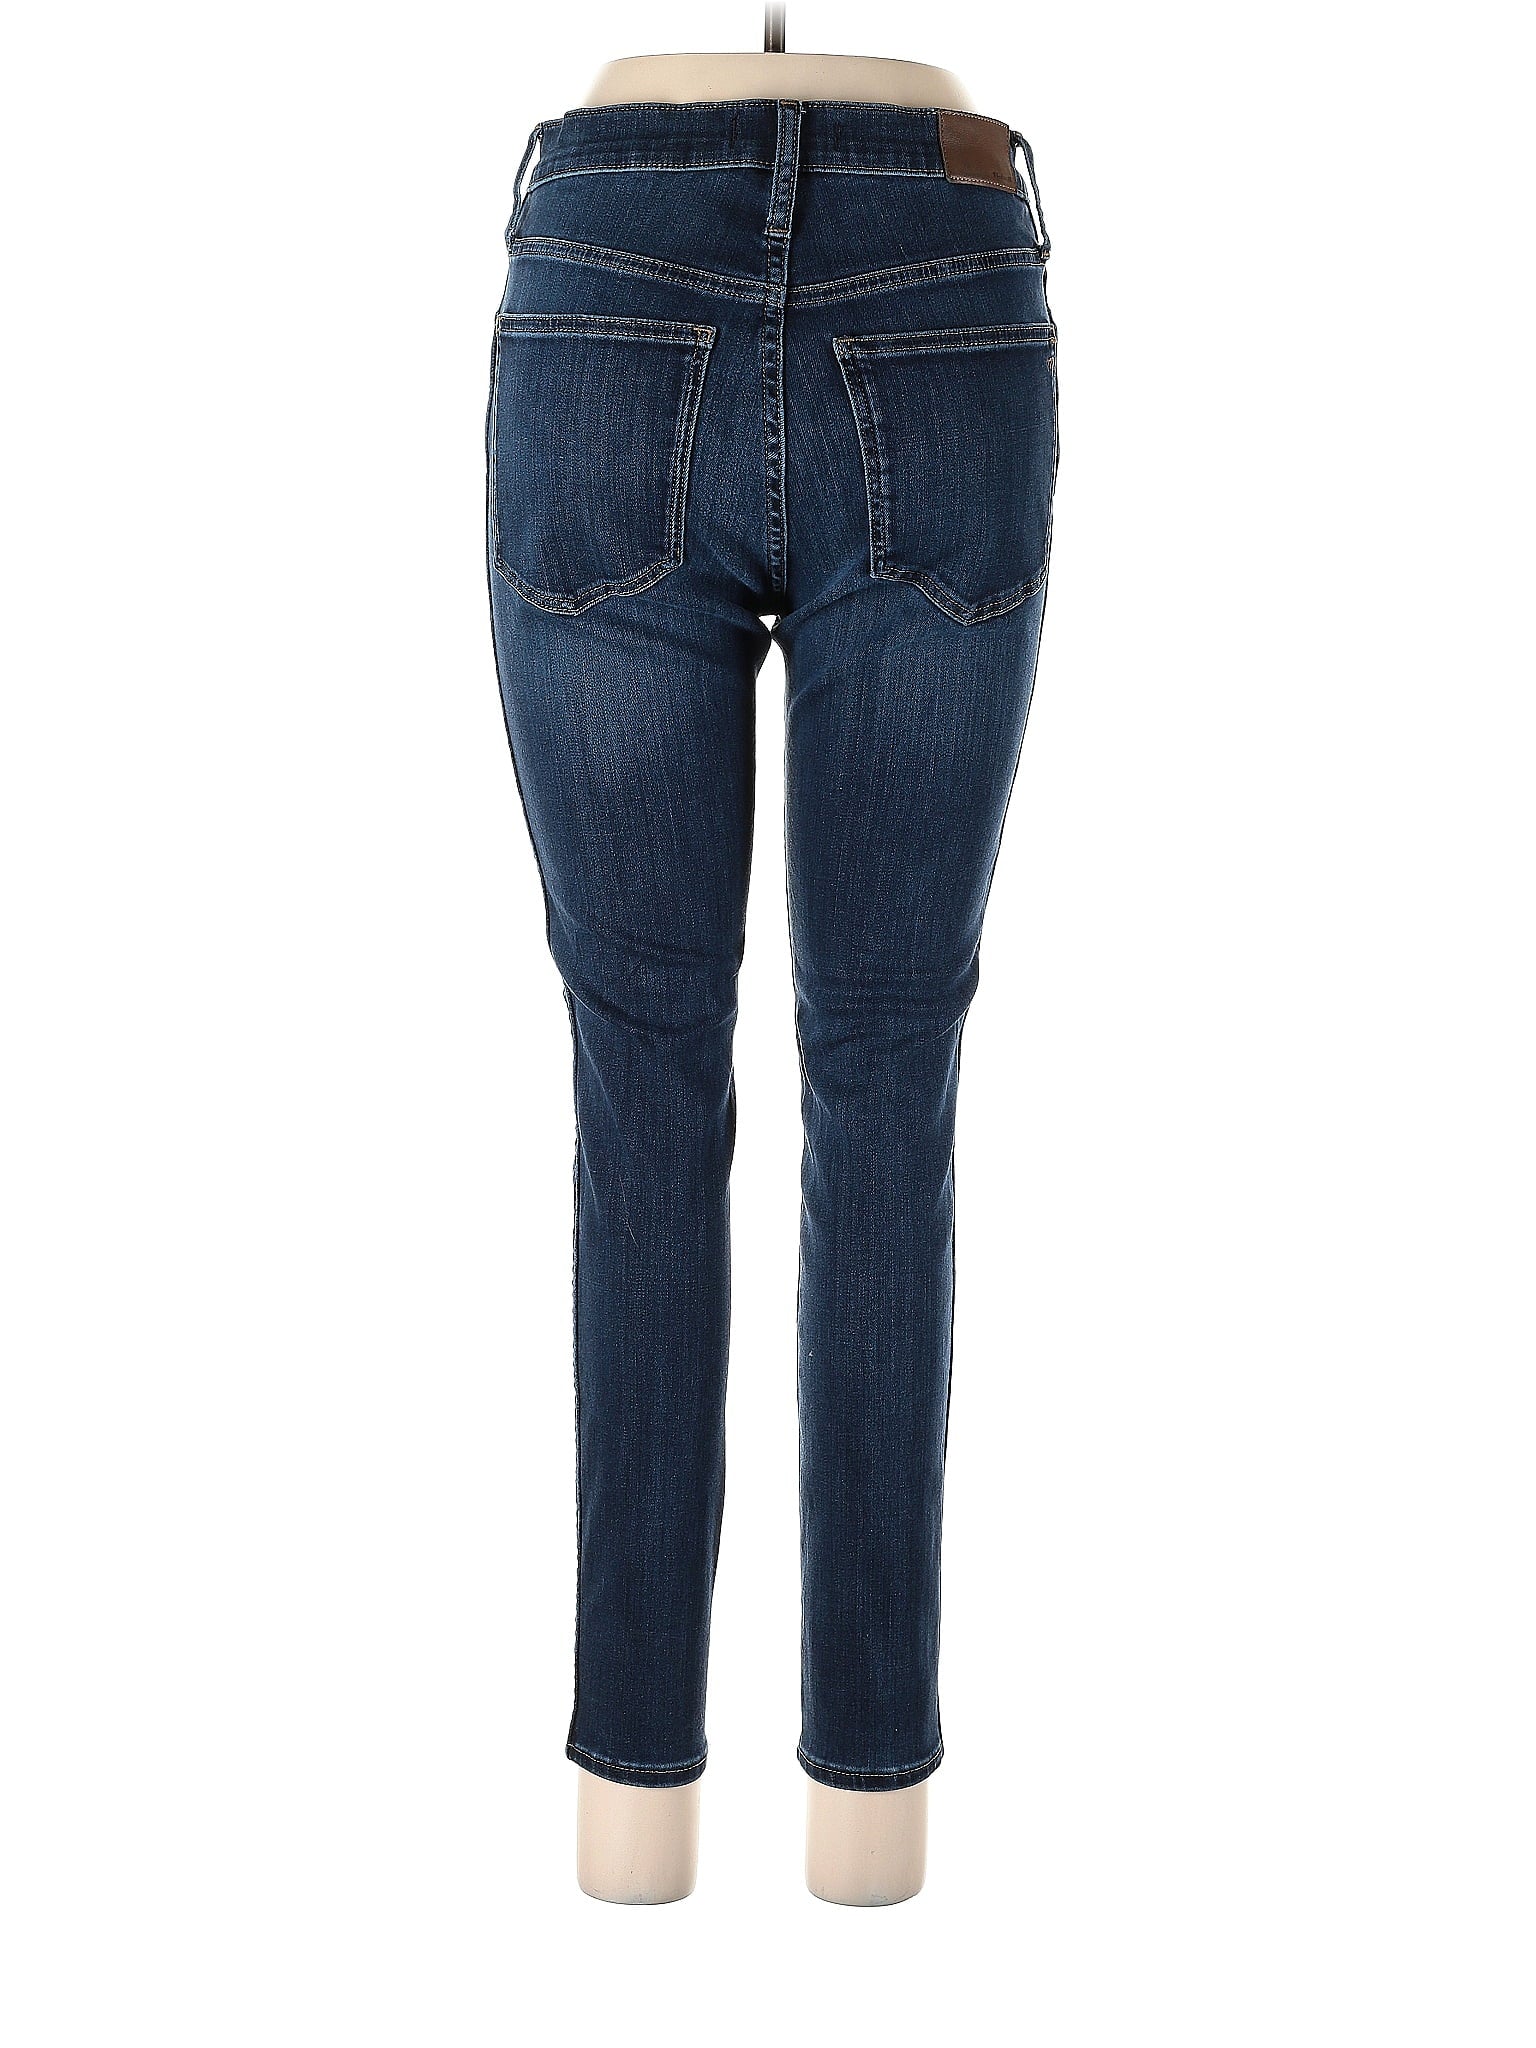 Mid-Rise Boyjeans Jeans in Dark Wash waist size - 30